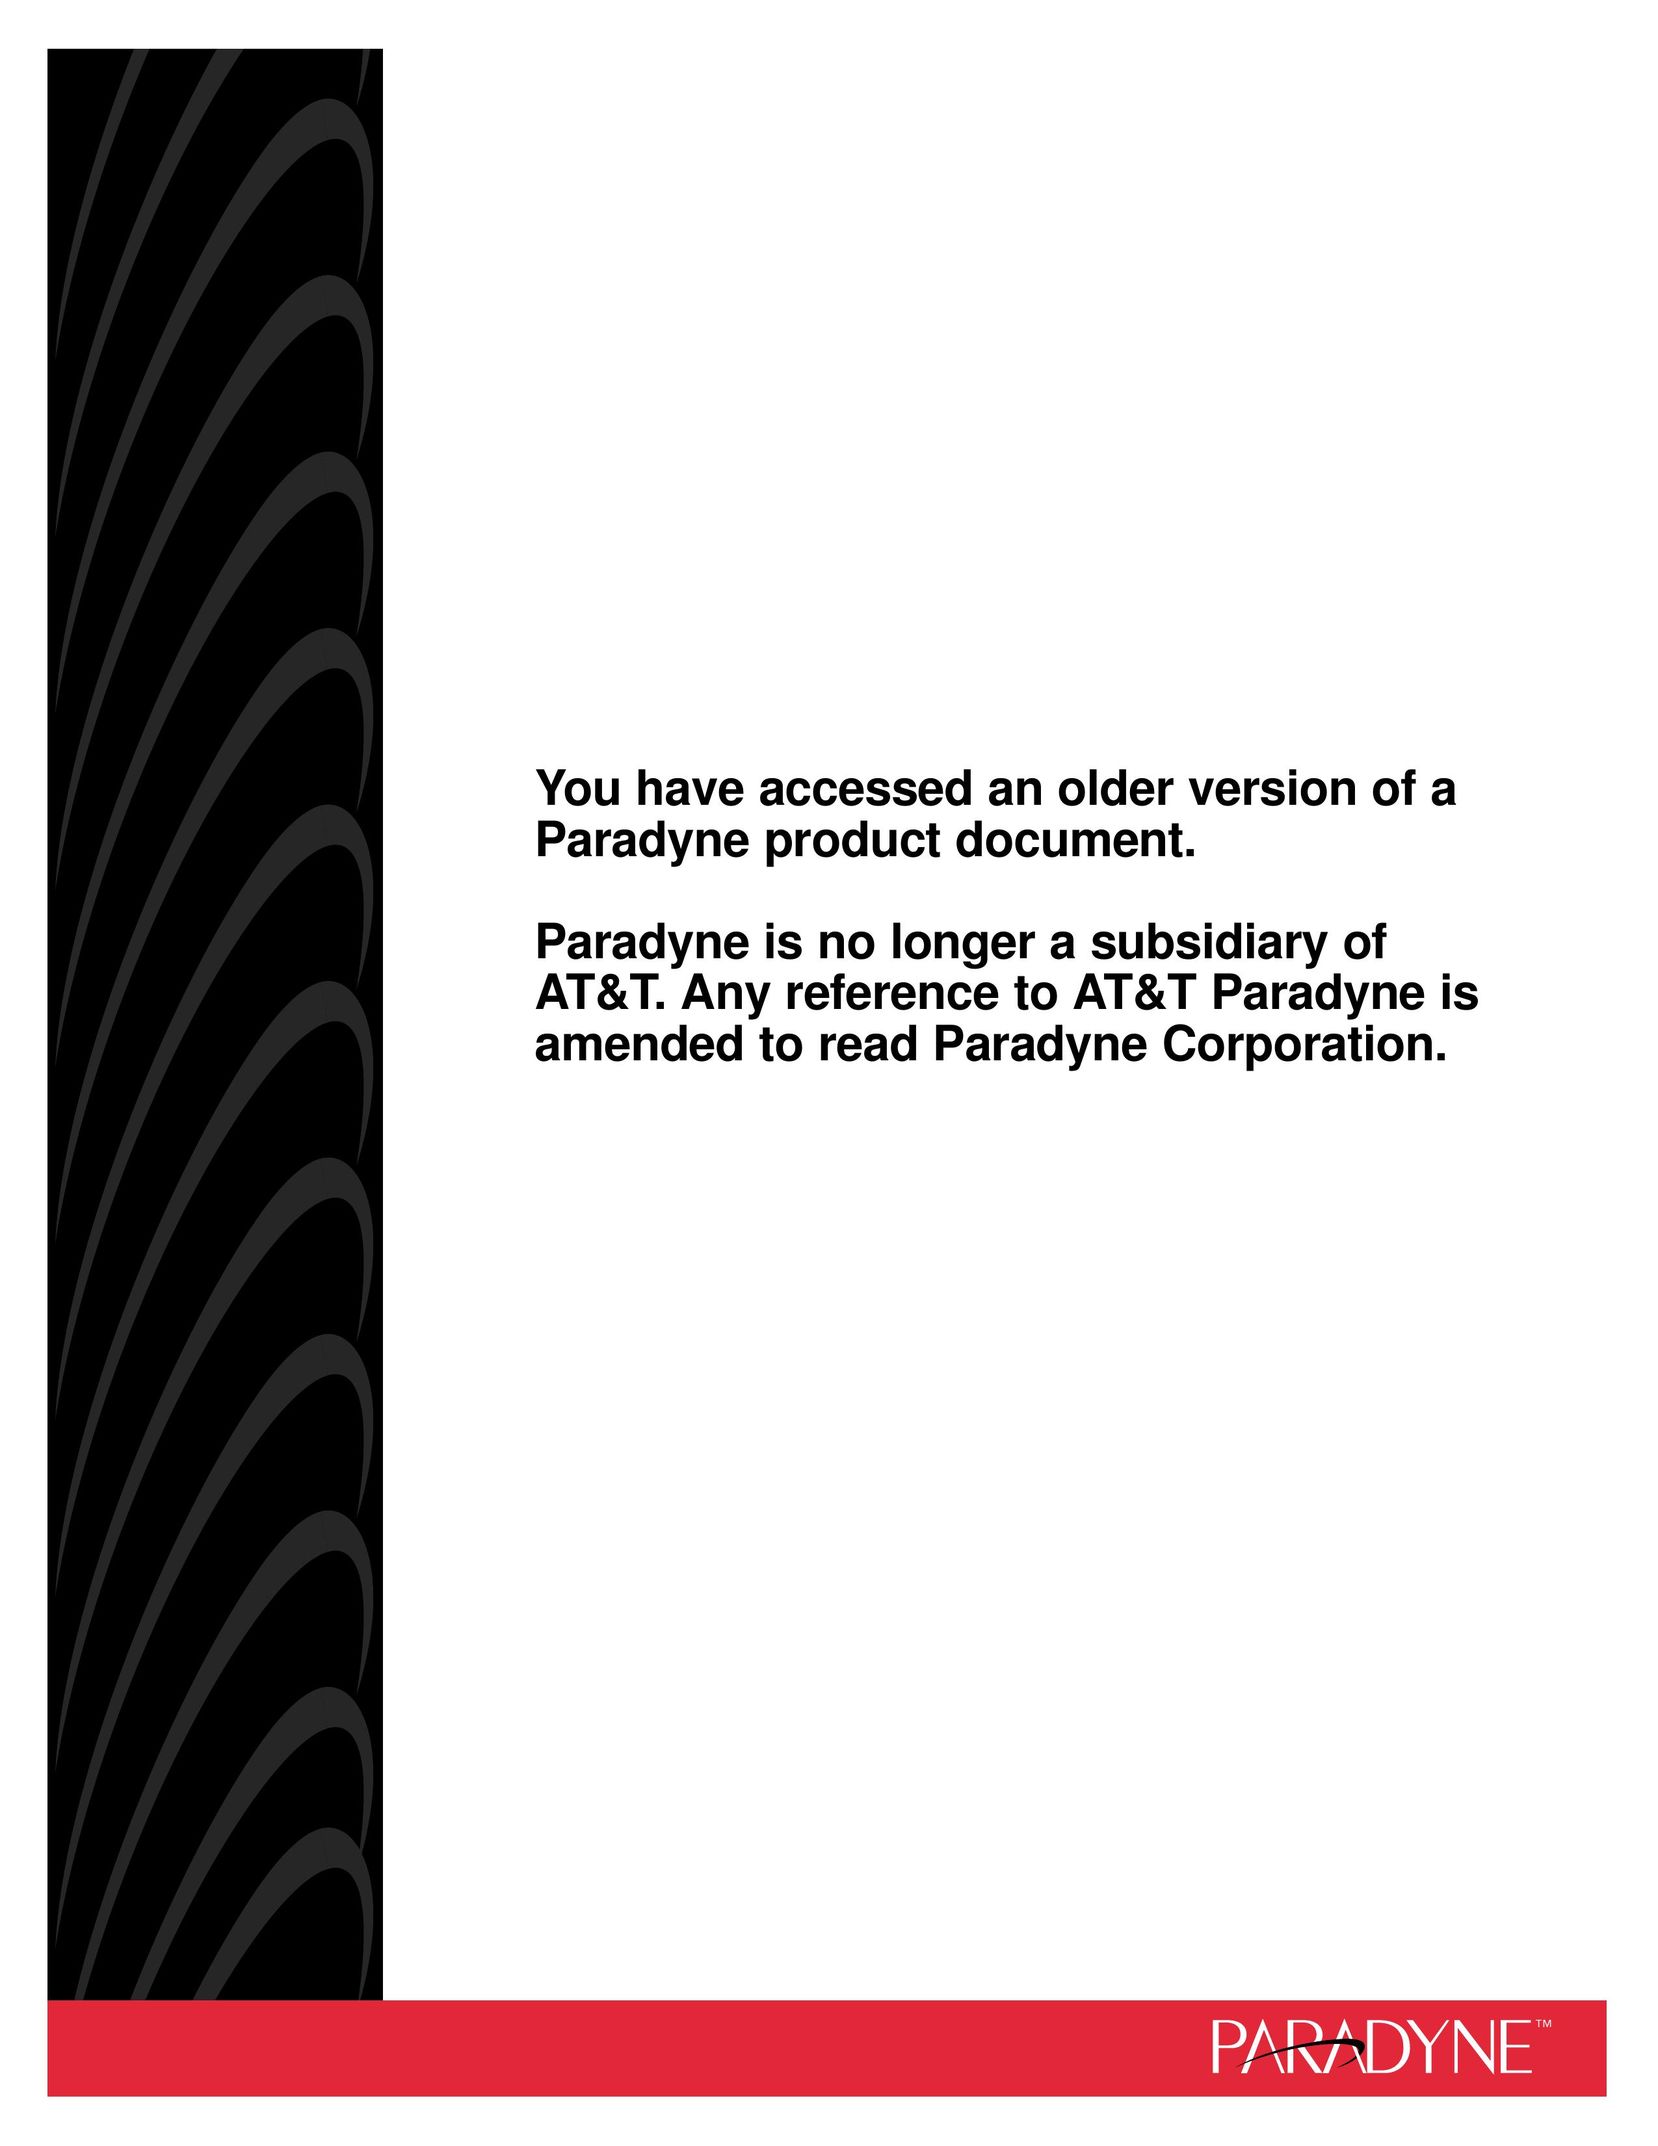 Paradyne 3921 Network Card User Manual